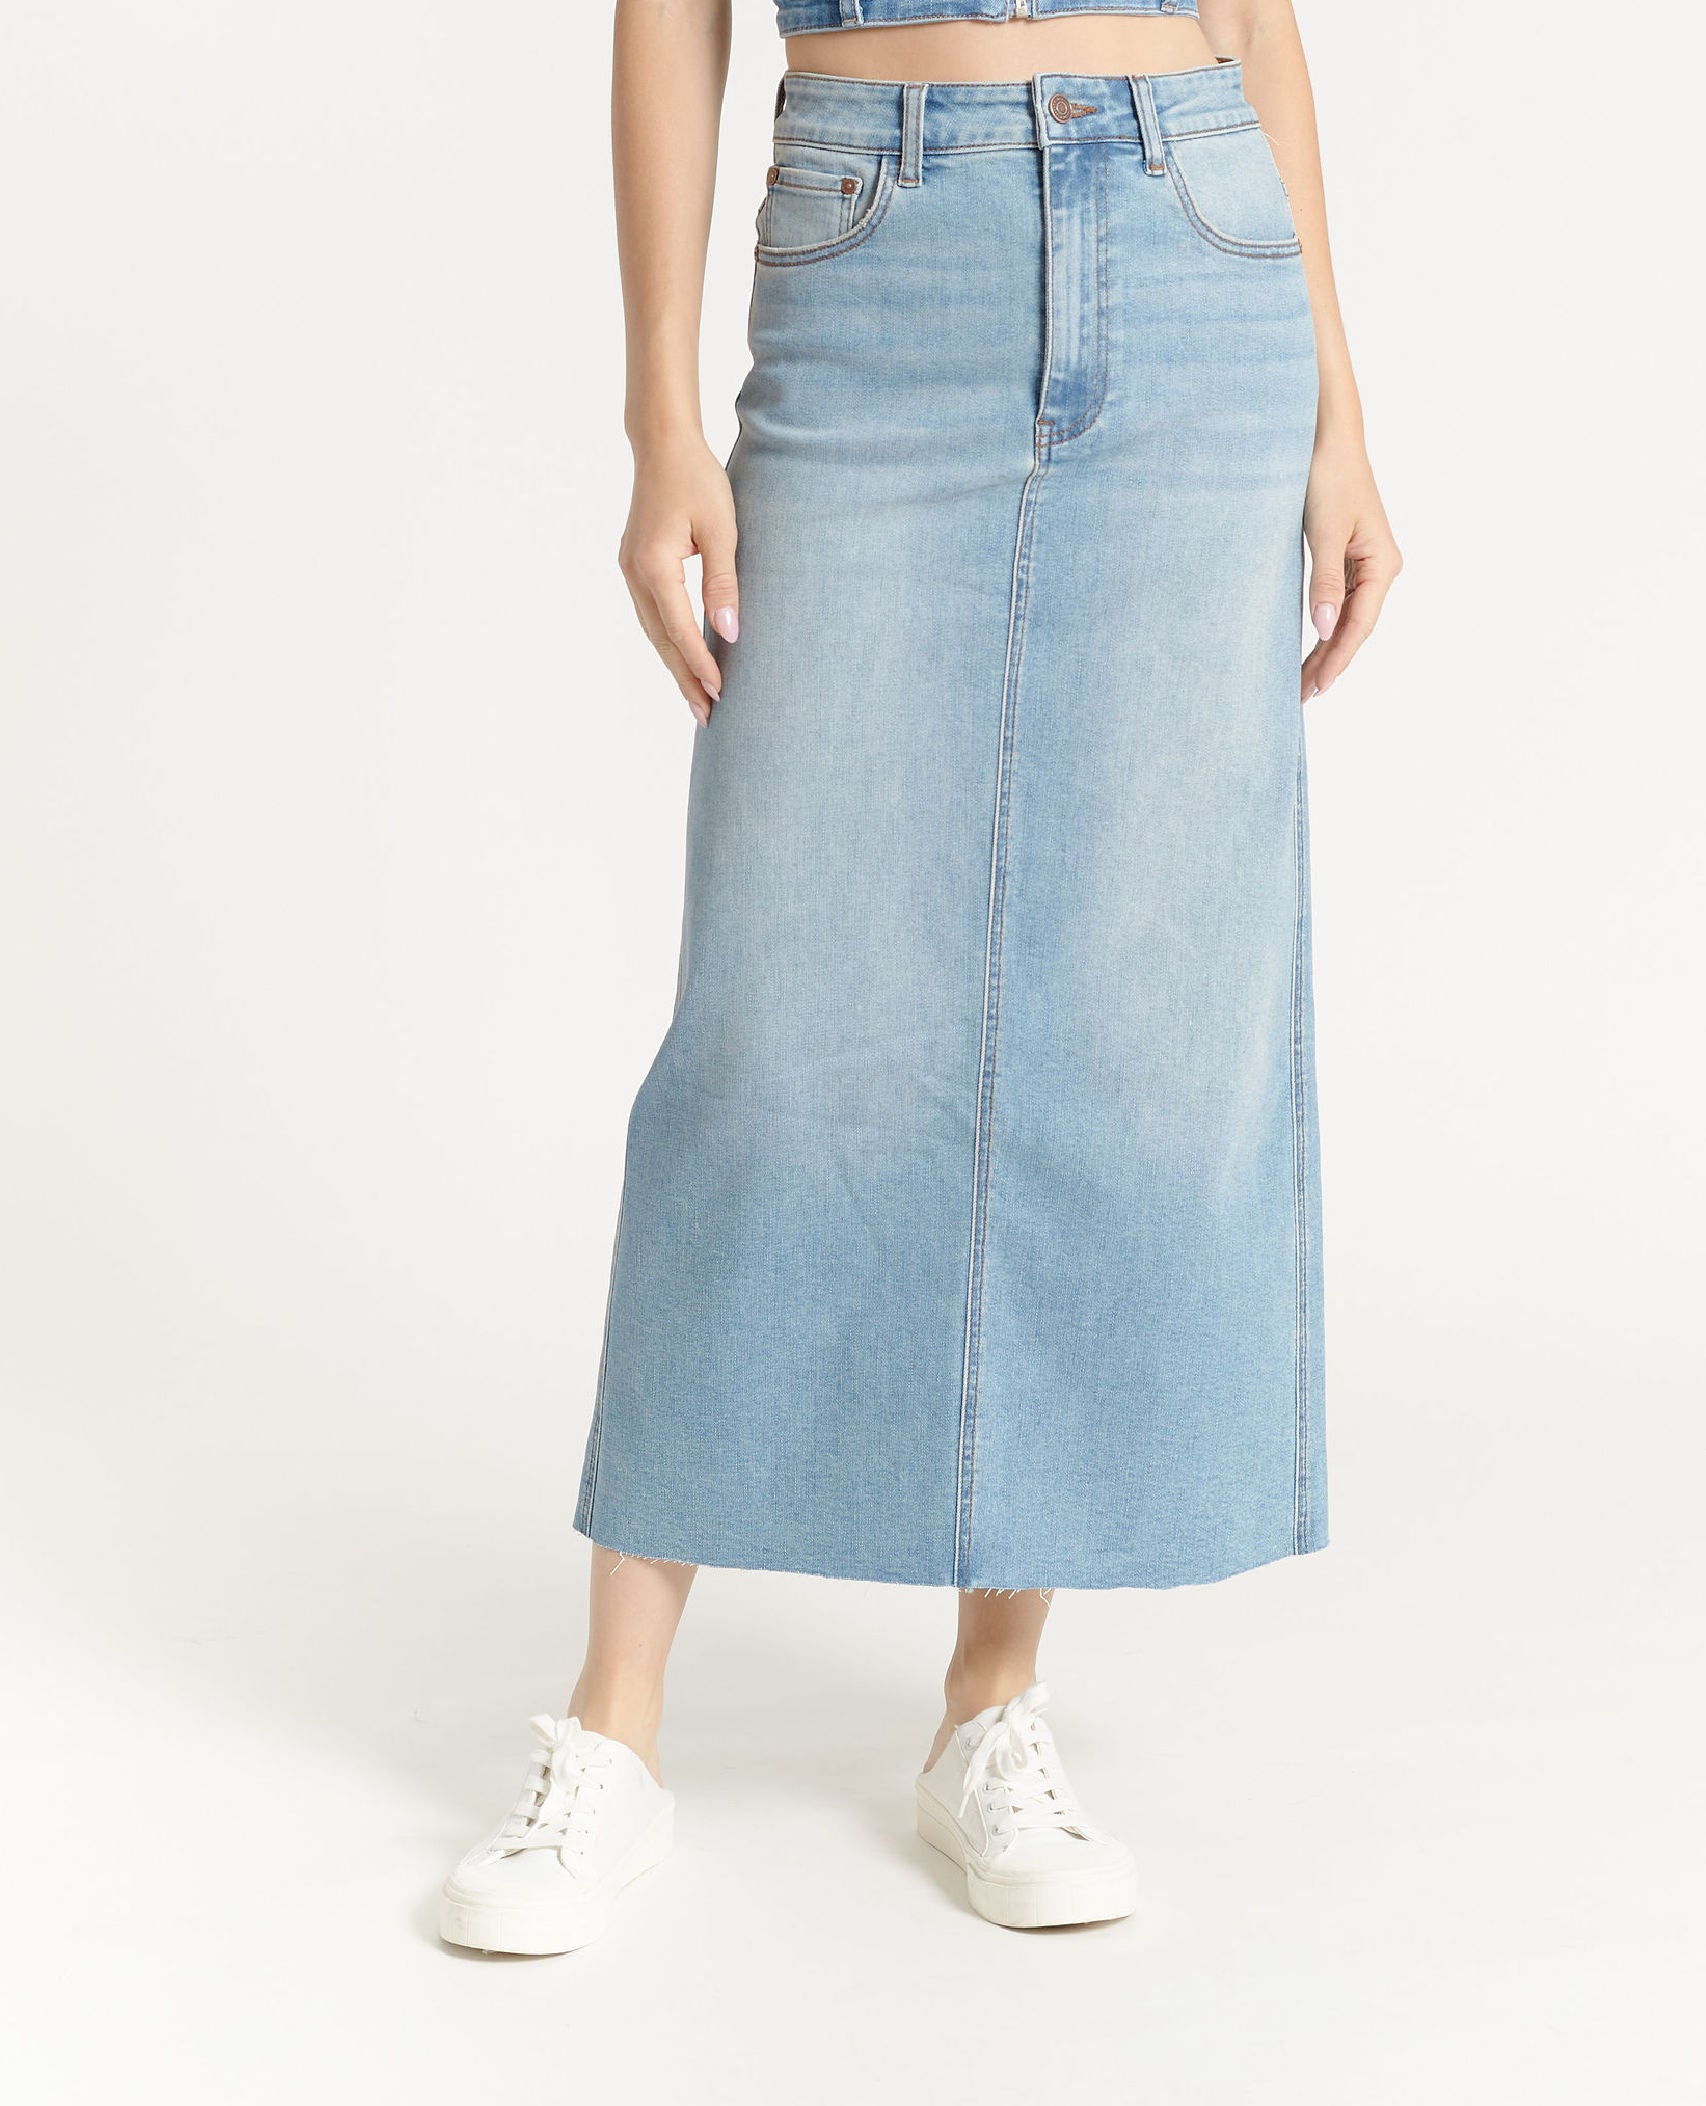 Long Pencil Skirt With Back Slip